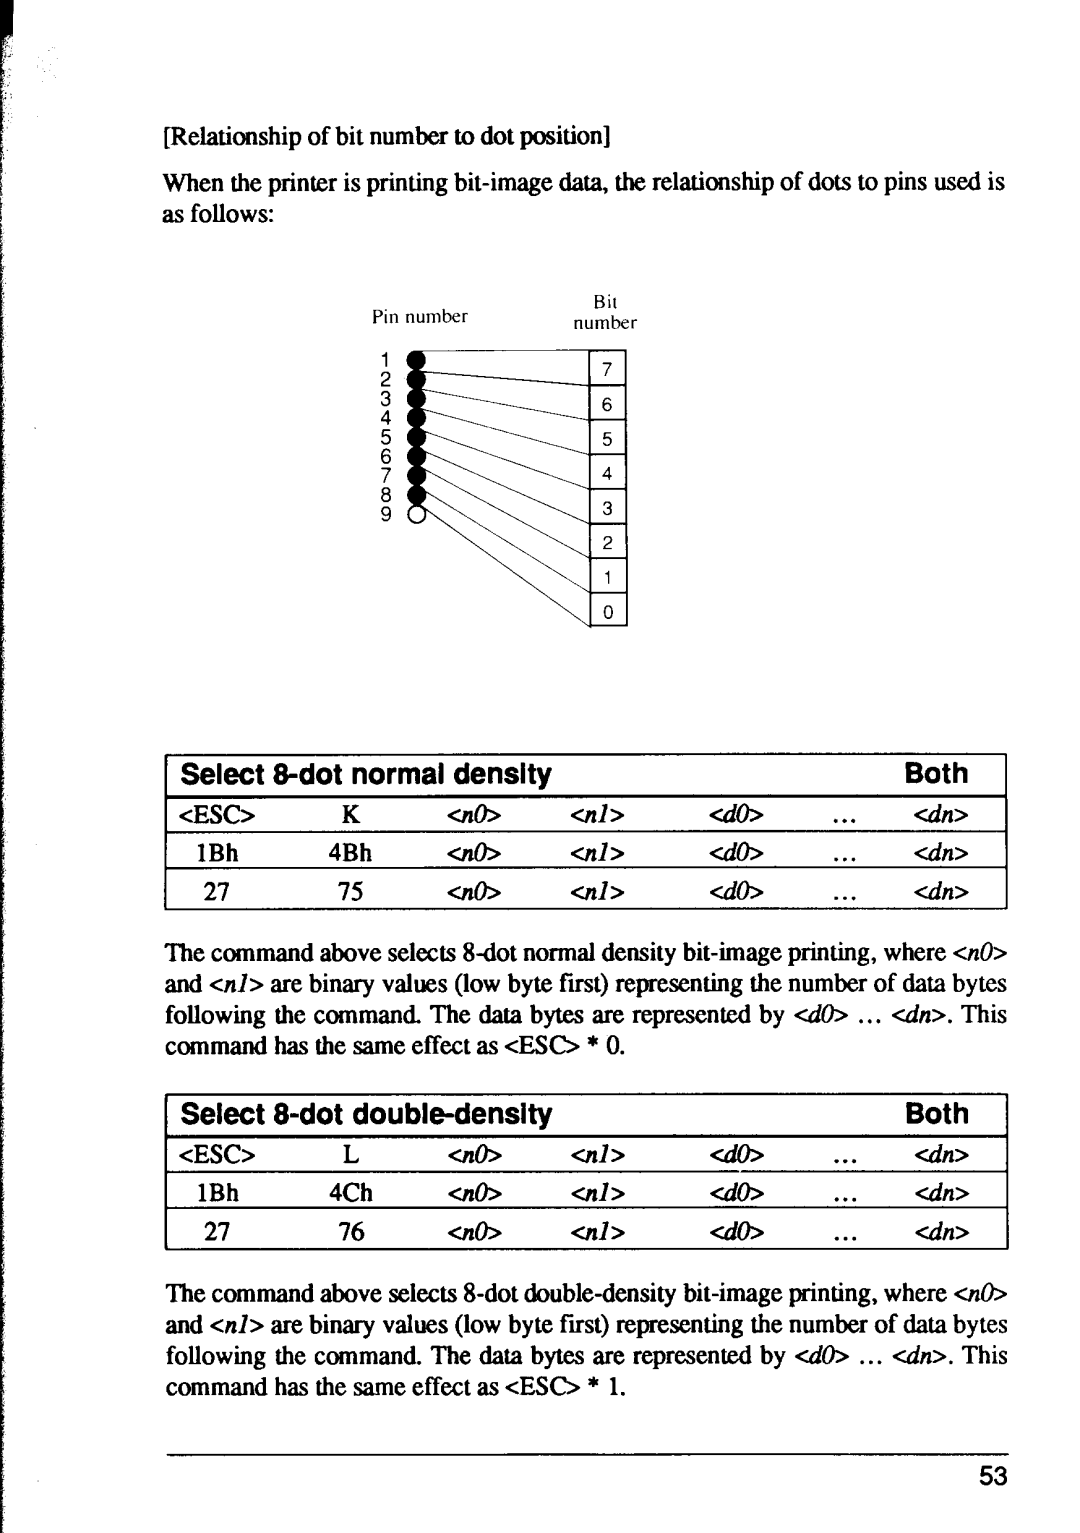 Star Micronics XR-1000, XR-1500 user manual Select &dot normal density, Select 8-dot double-density, Both, cESC 